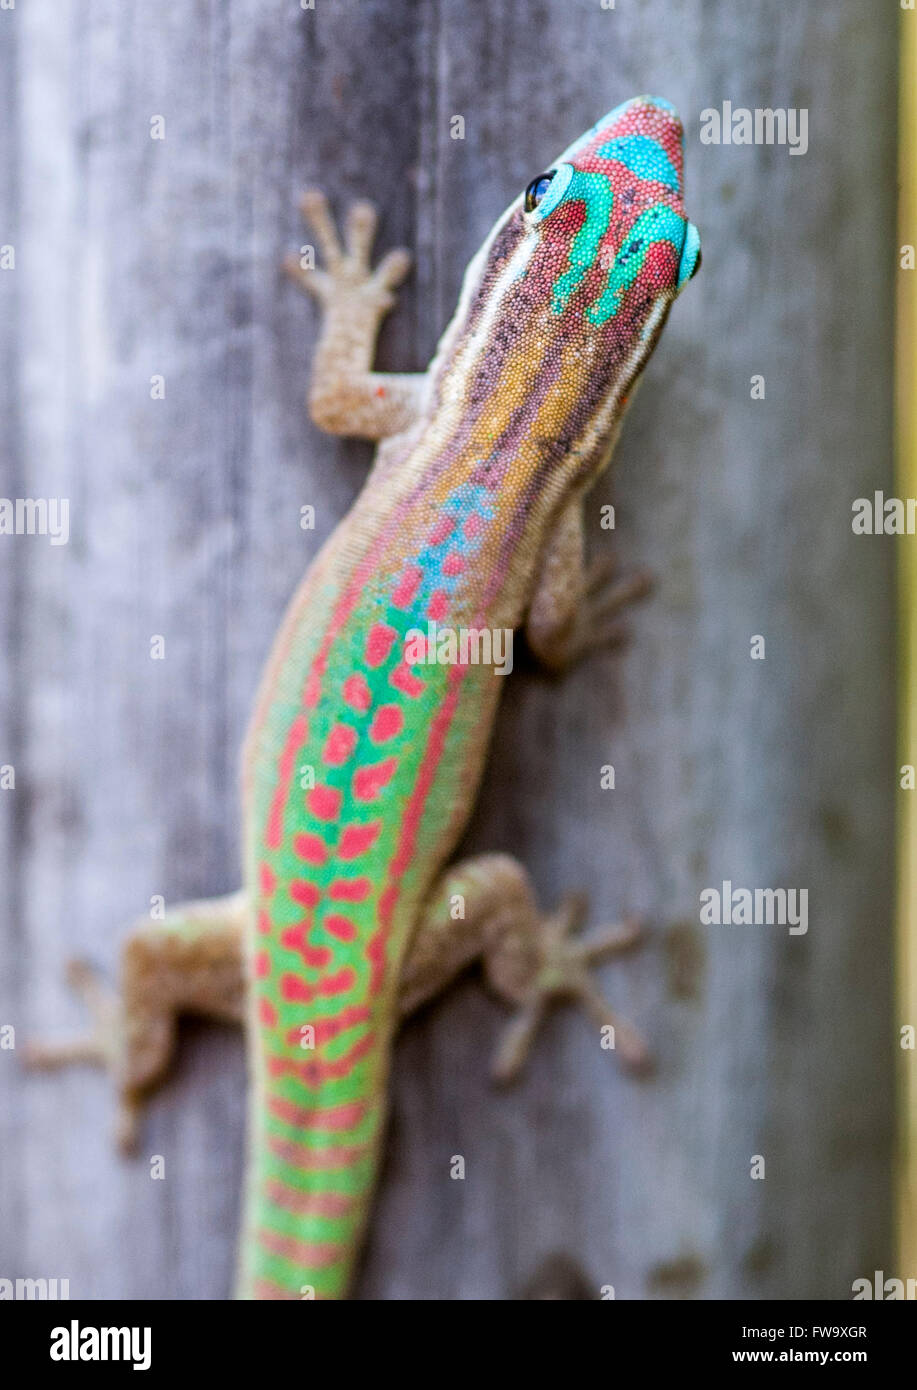 Ornate day gecko (Phelsuma ornata) on the islet of Ile Aux Aigrettes in Mauritius. Stock Photo